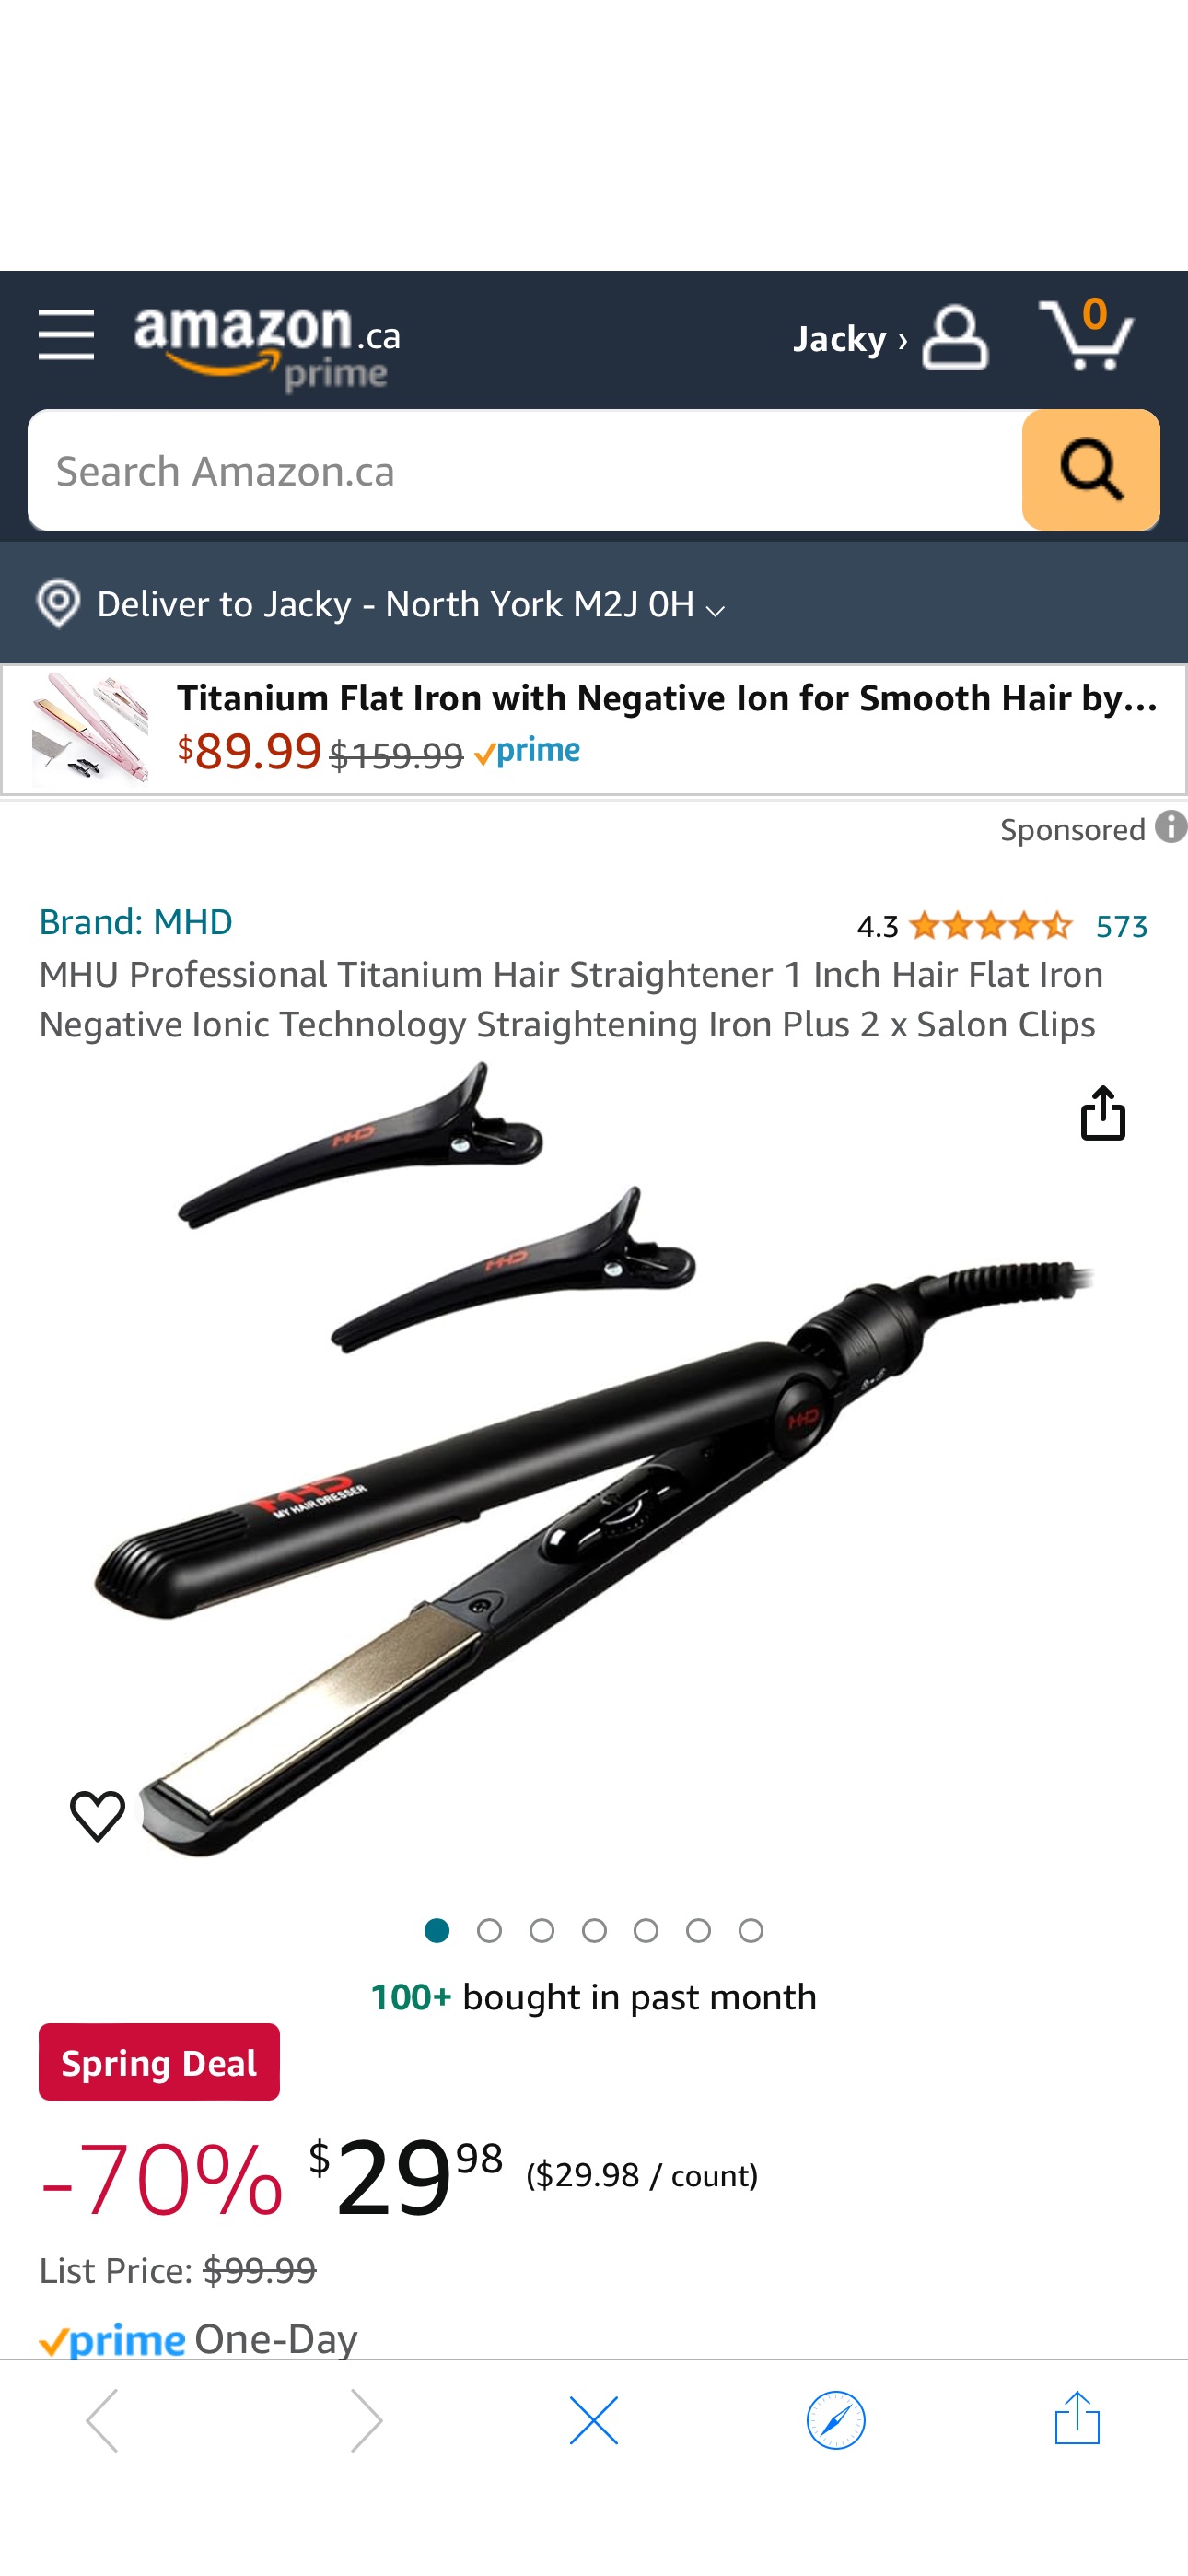 MHU Professional Titanium Hair Straightener 1 Inch Hair Flat Iron Negative Ionic Technology Straightening Iron Plus 2 x Salon Clips : Amazon.ca: Beauty & Personal Care